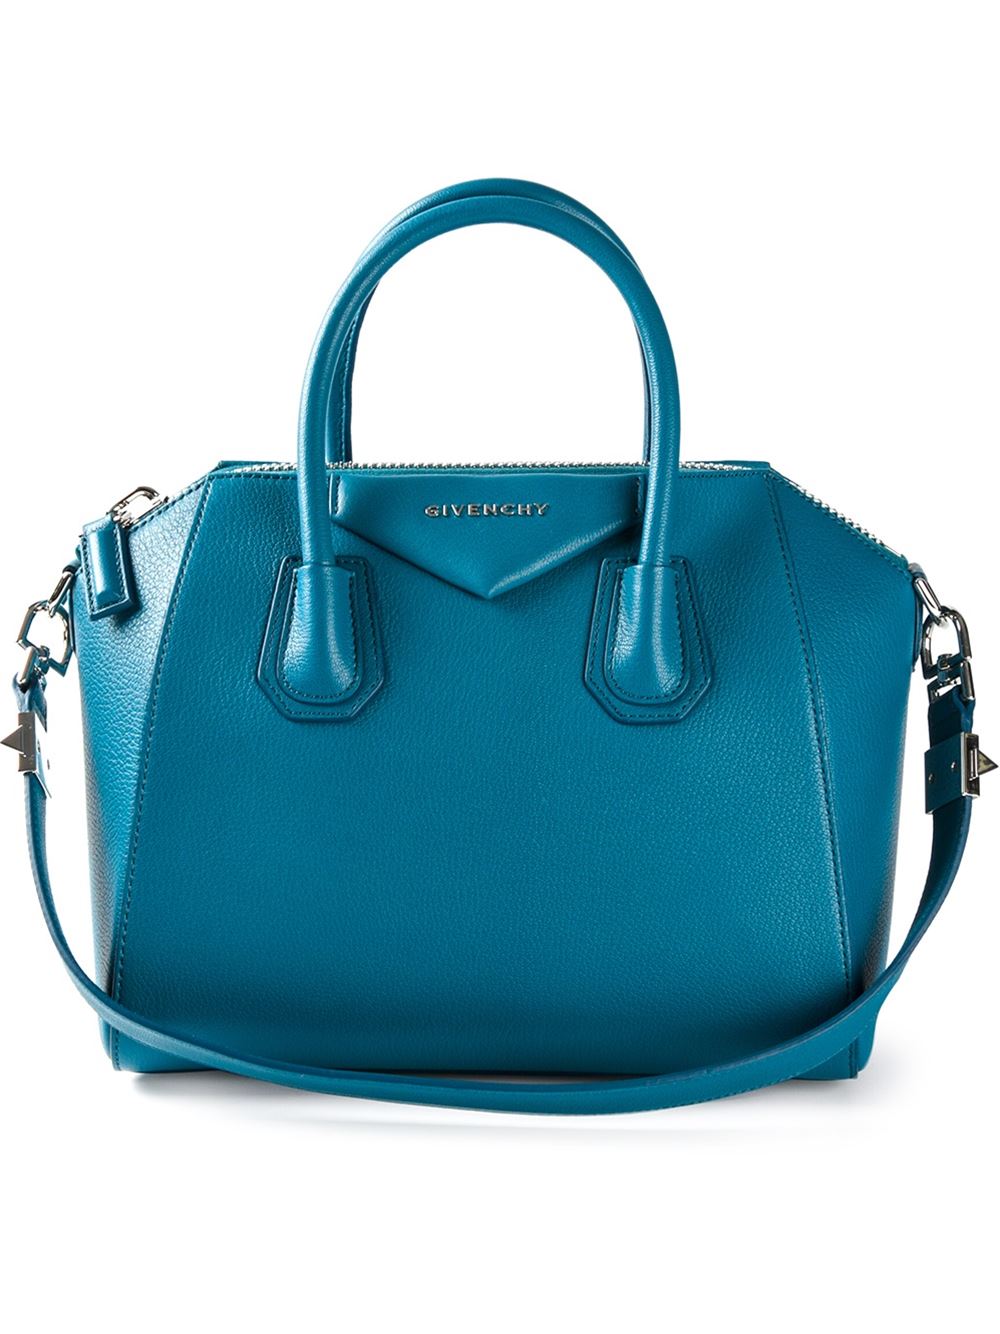 Givenchy Spring / Summer 2015 Antigona Tote Bags | Spotted Fashion